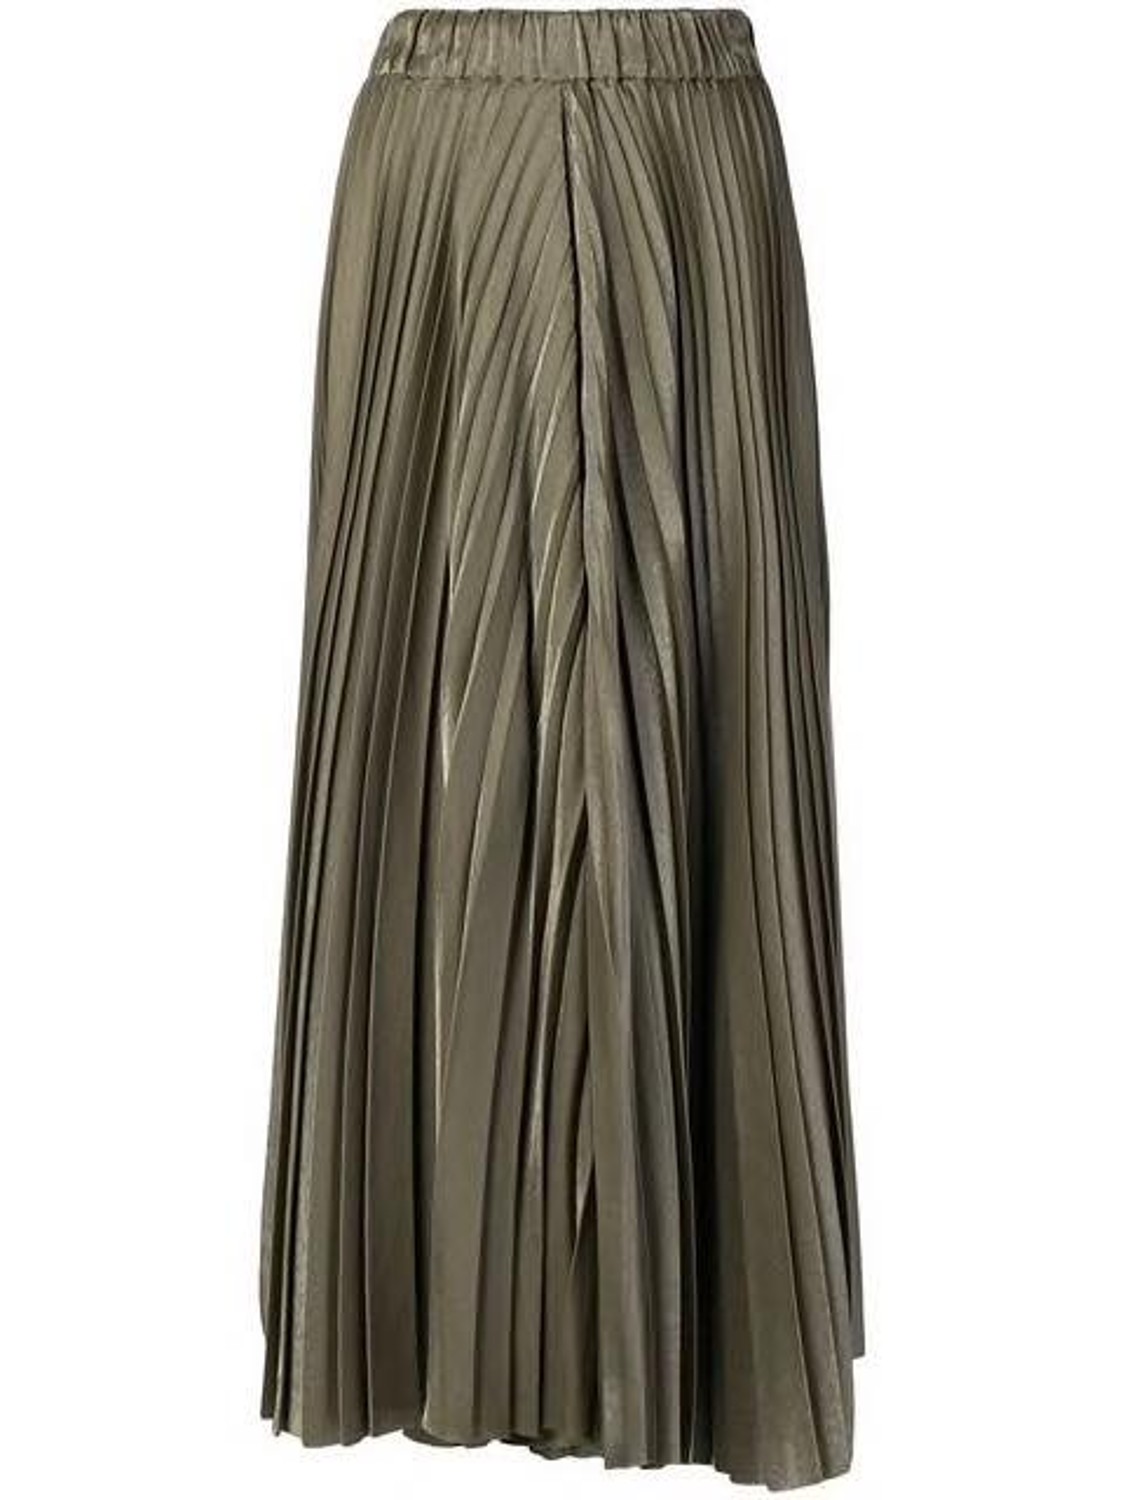 shop Dusan Saldi Pantaloni: Pantalone Dusan, modello ampio, elastico in vita, in seta, plisse.

Composizione: 100% seta. number 1380